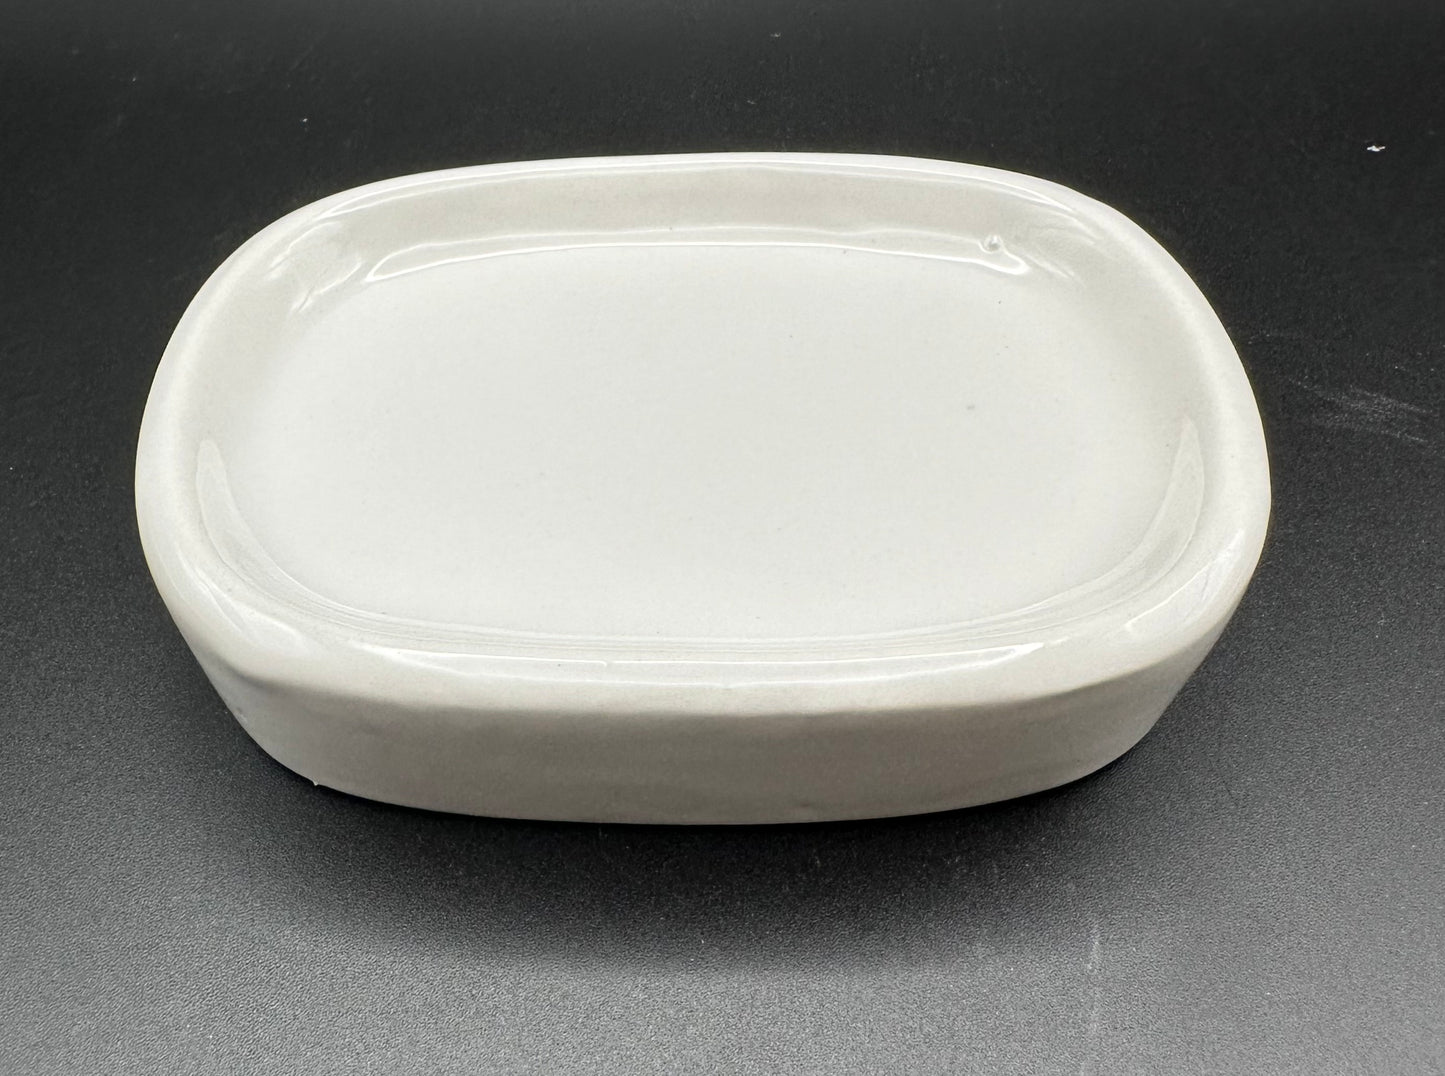 Set Bagno Ceramica Bianco